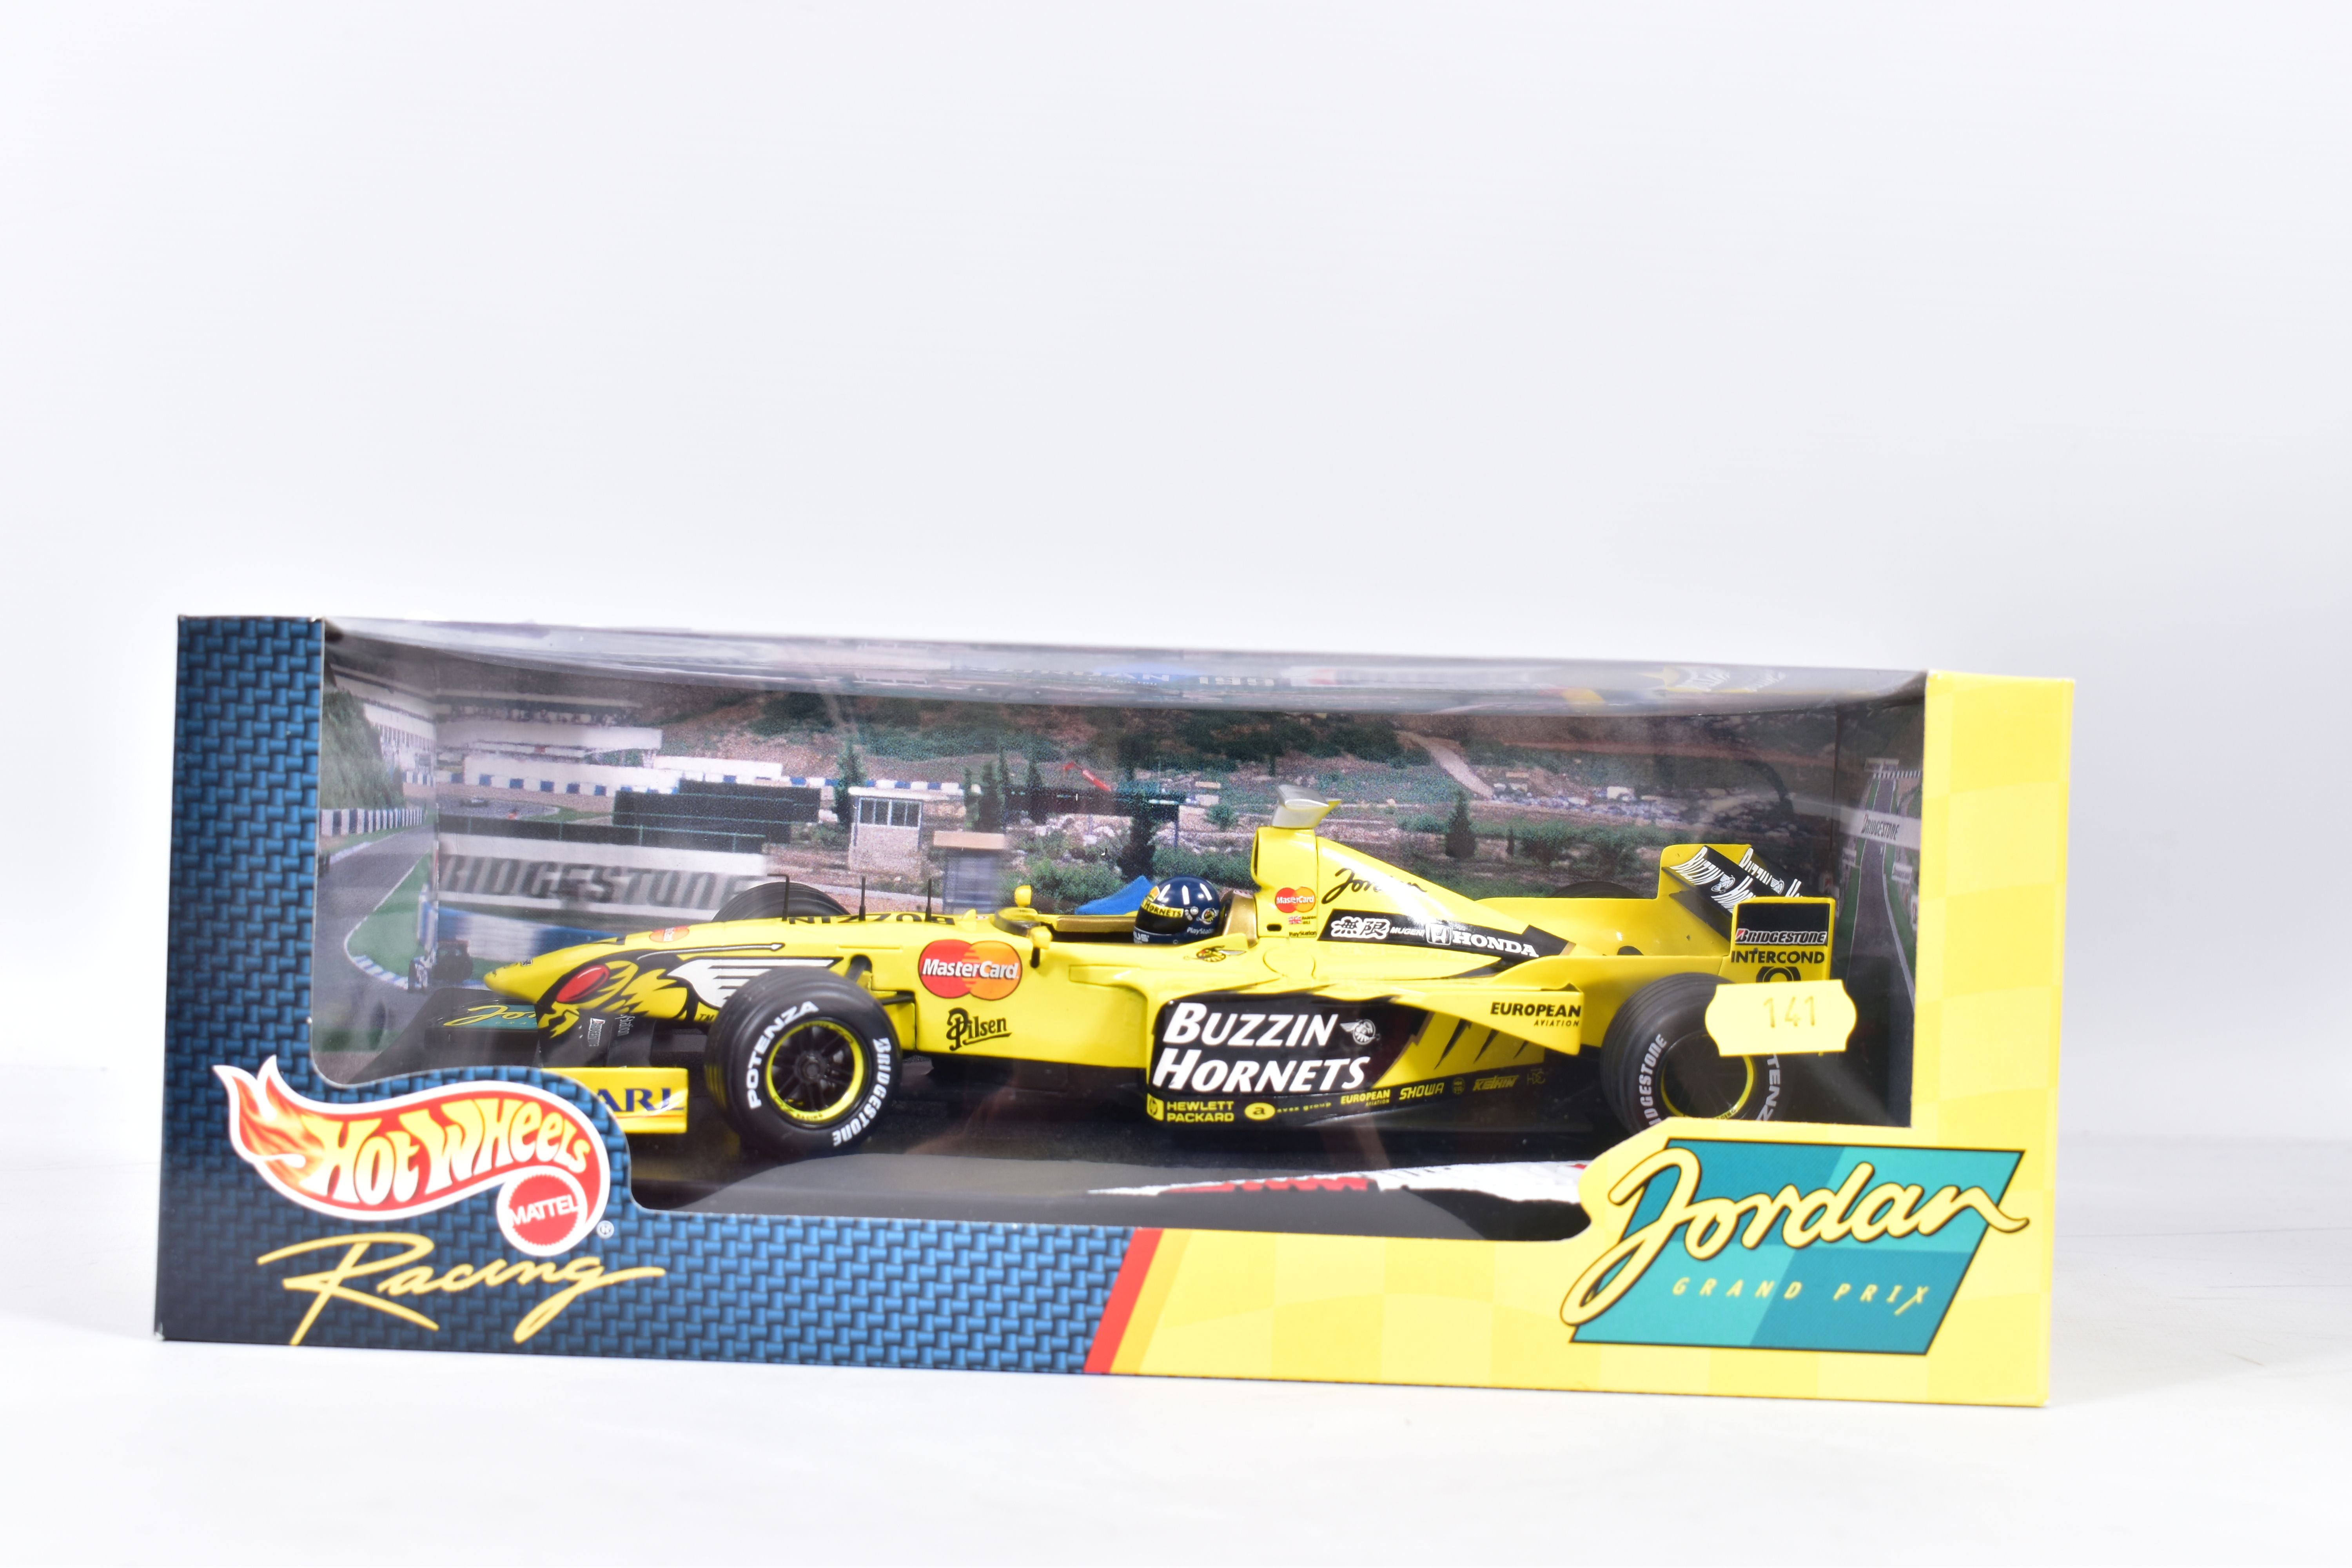 THREE BOXED MATTEL HOT WHEELS RACING 1;18 SCALE F1 RACING CAR MODELS, Ferrari 2000 World Champions - - Image 2 of 6